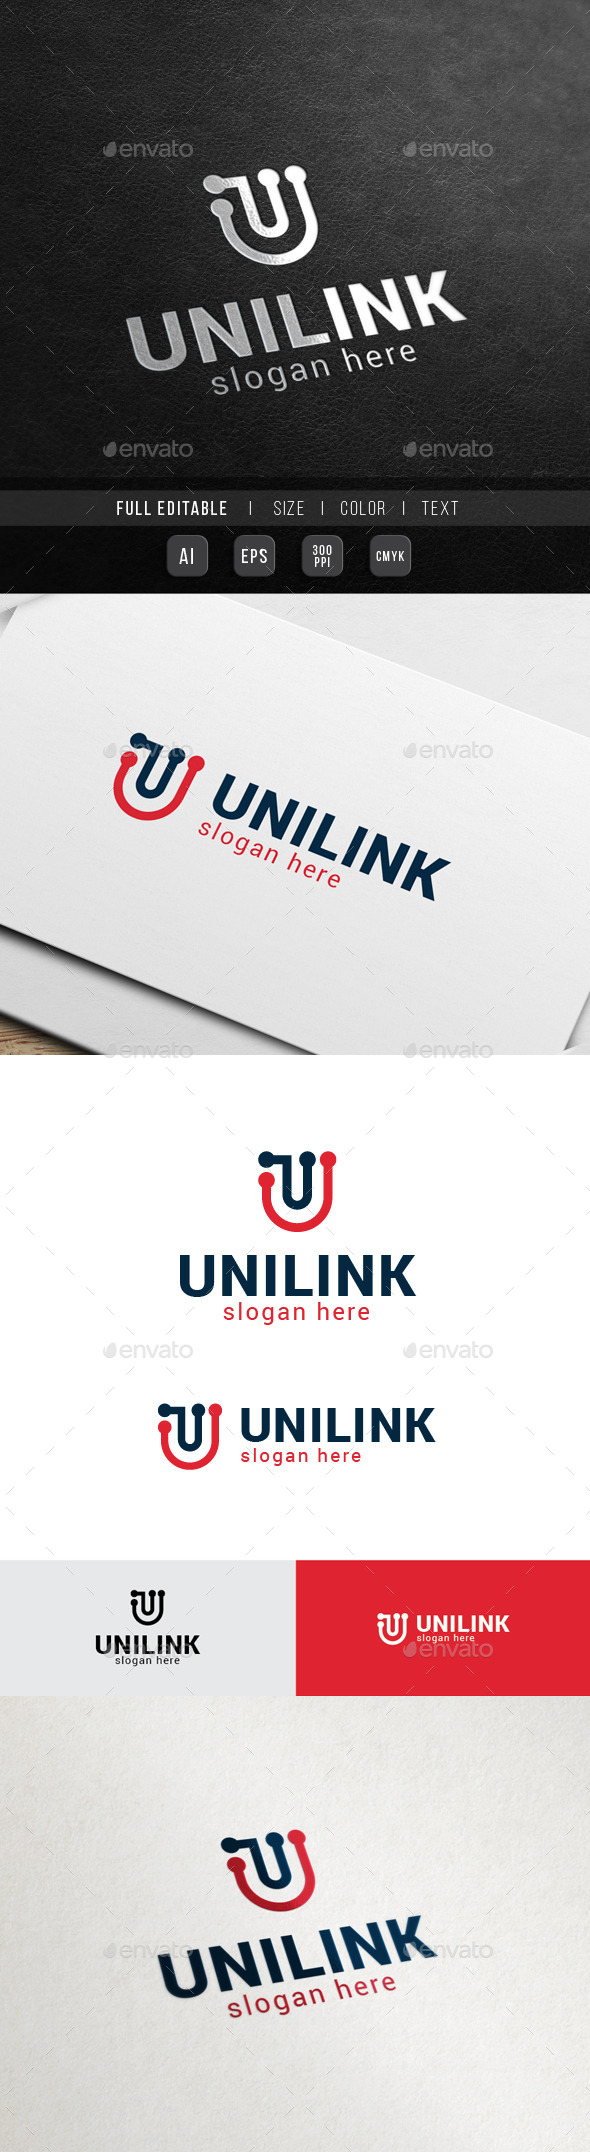 U - Universal Link - Network